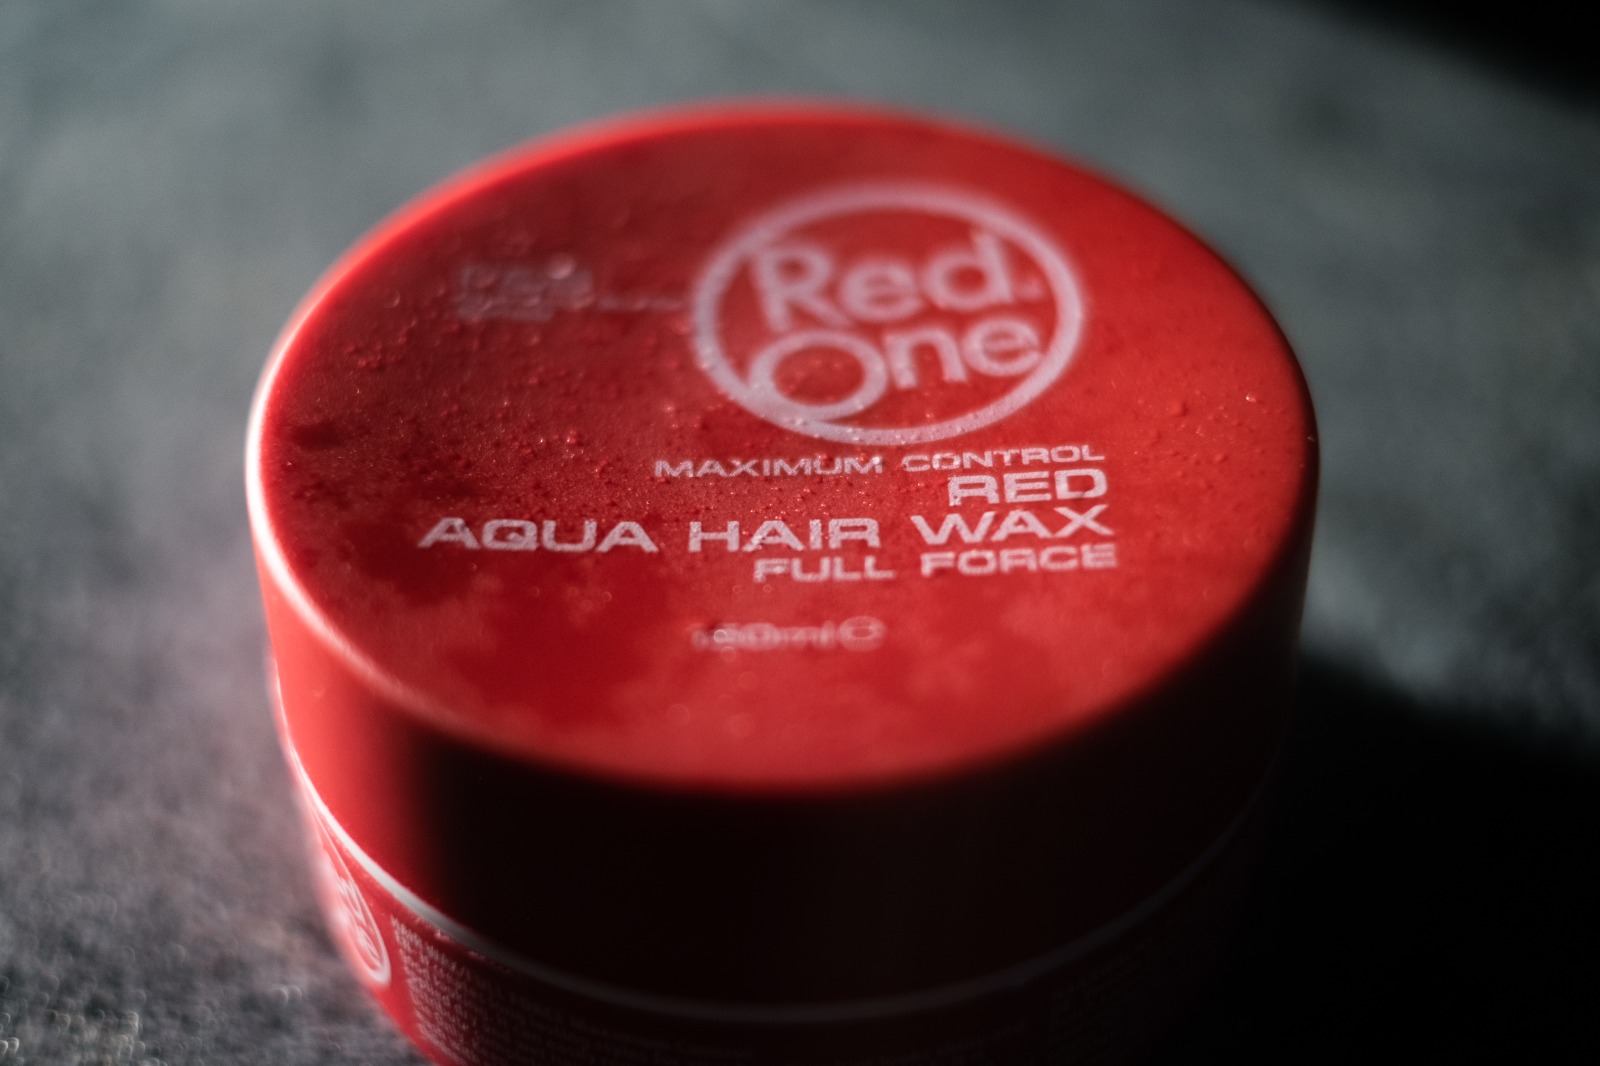 Red One Orange Aqua Hair Gel Wax 150ml